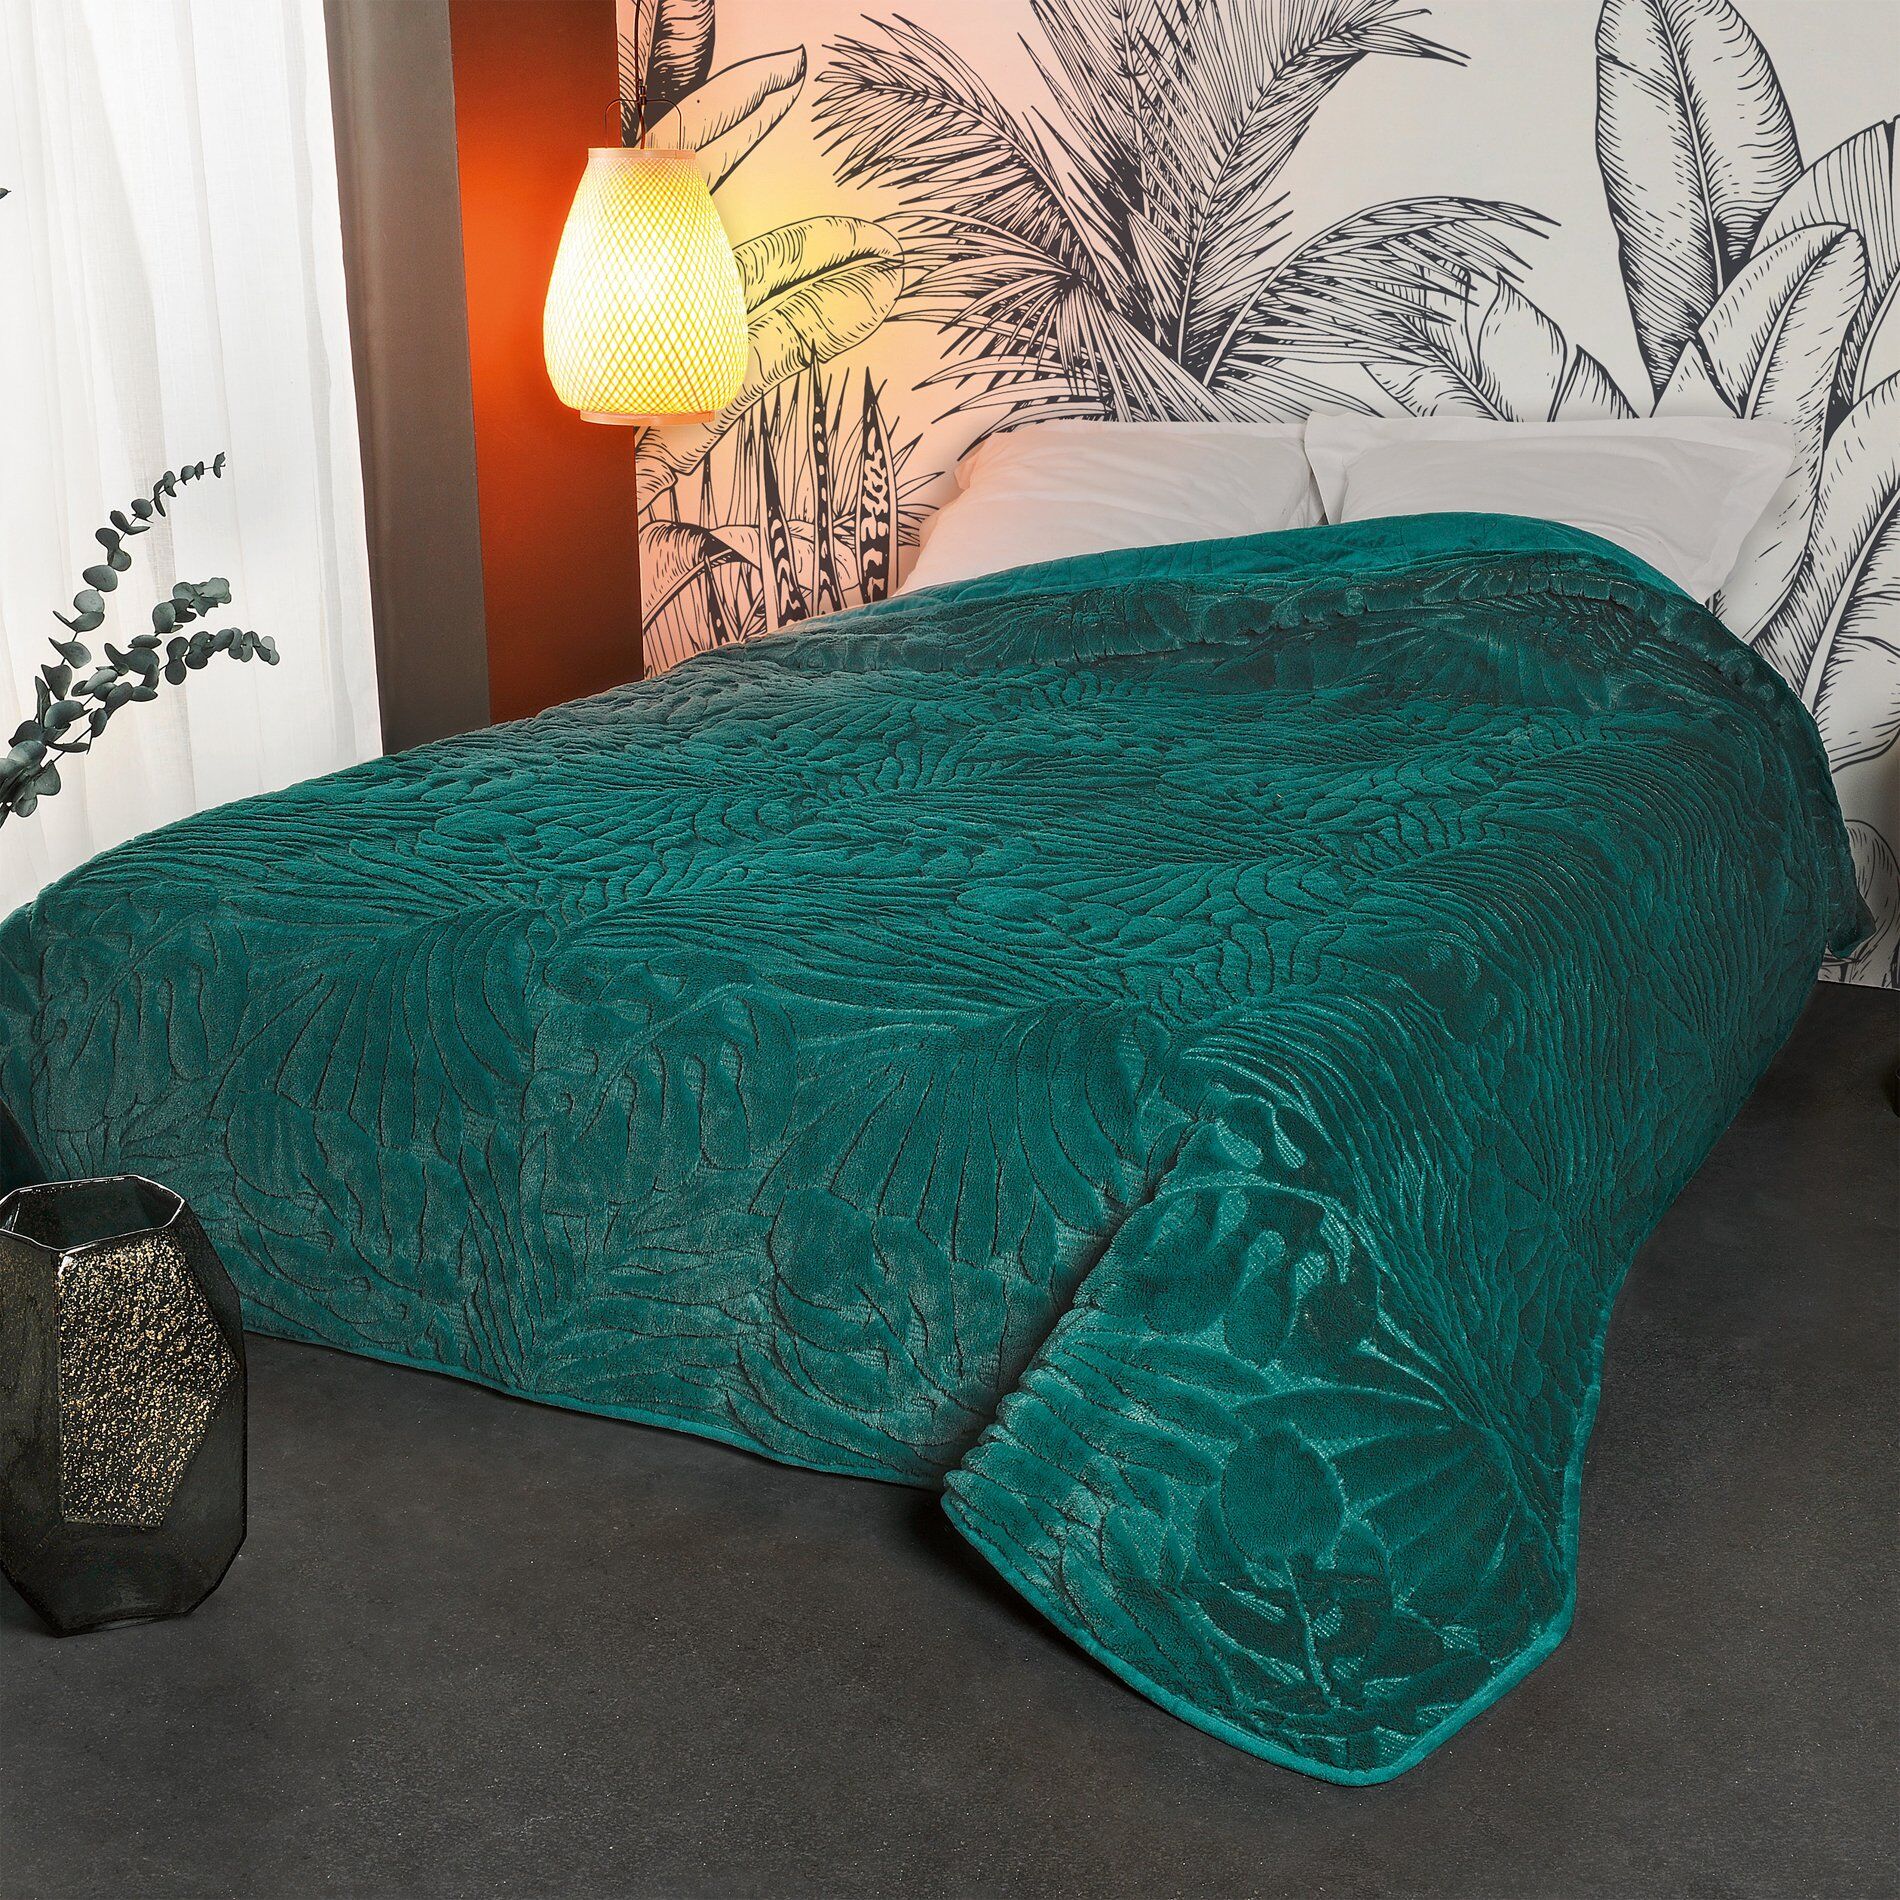 Linder Dessus de lit feuillages polyester vert emeraude 150x150cm